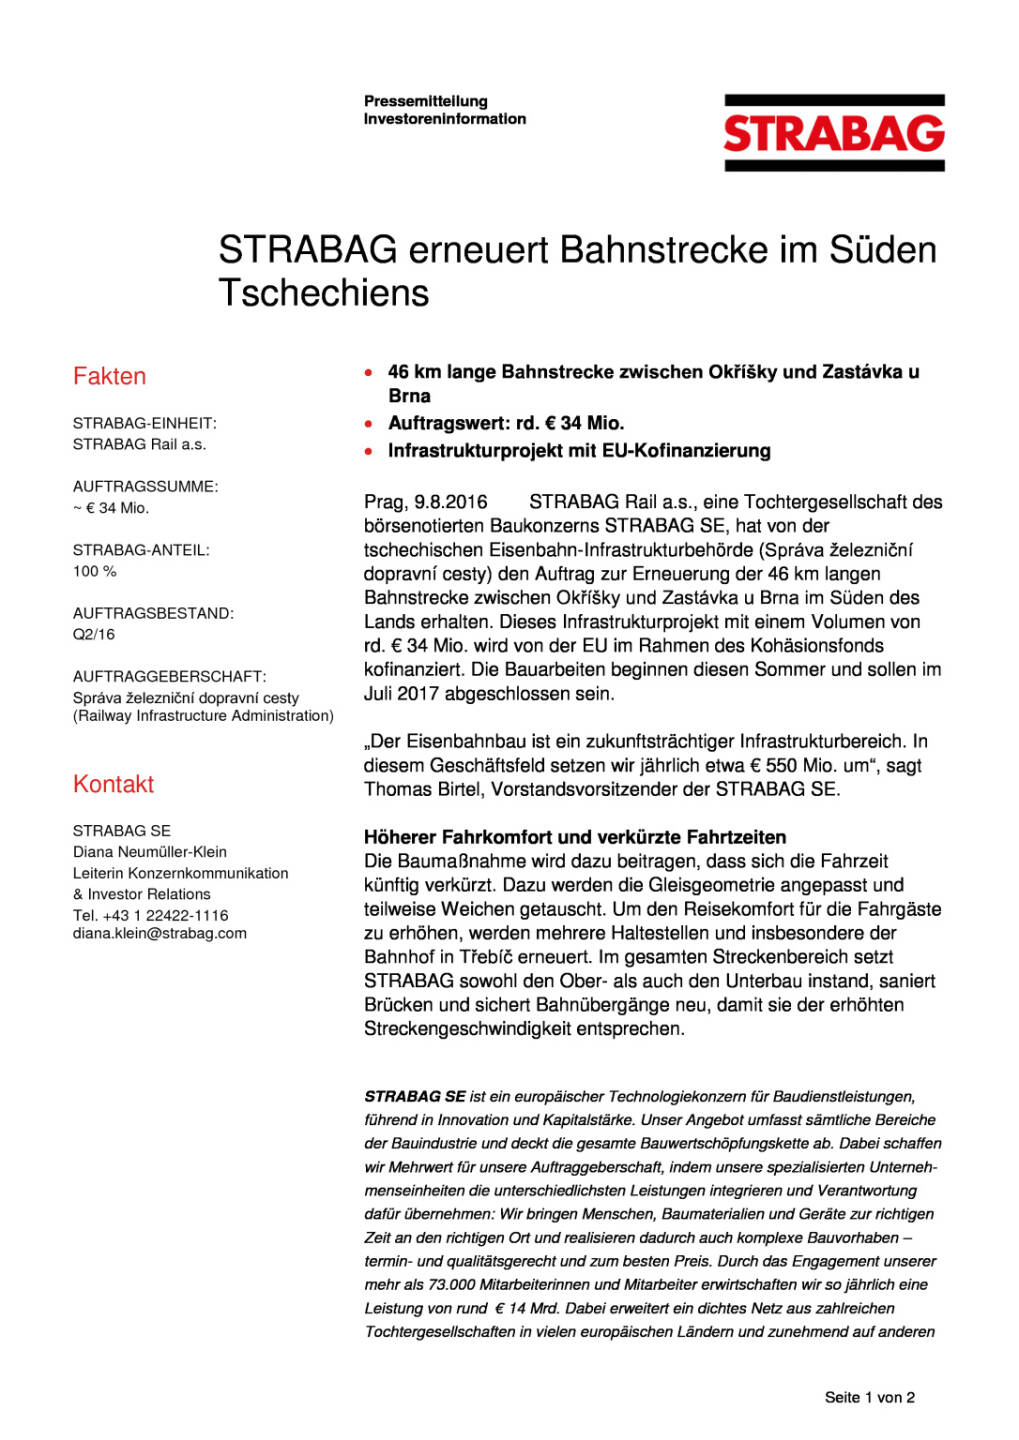 Strabag erneuert Bahnstrecke im Süden Tschechiens, Seite 1/2, komplettes Dokument unter http://boerse-social.com/static/uploads/file_1587_strabag_erneuert_bahnstrecke_im_suden_tschechiens.pdf